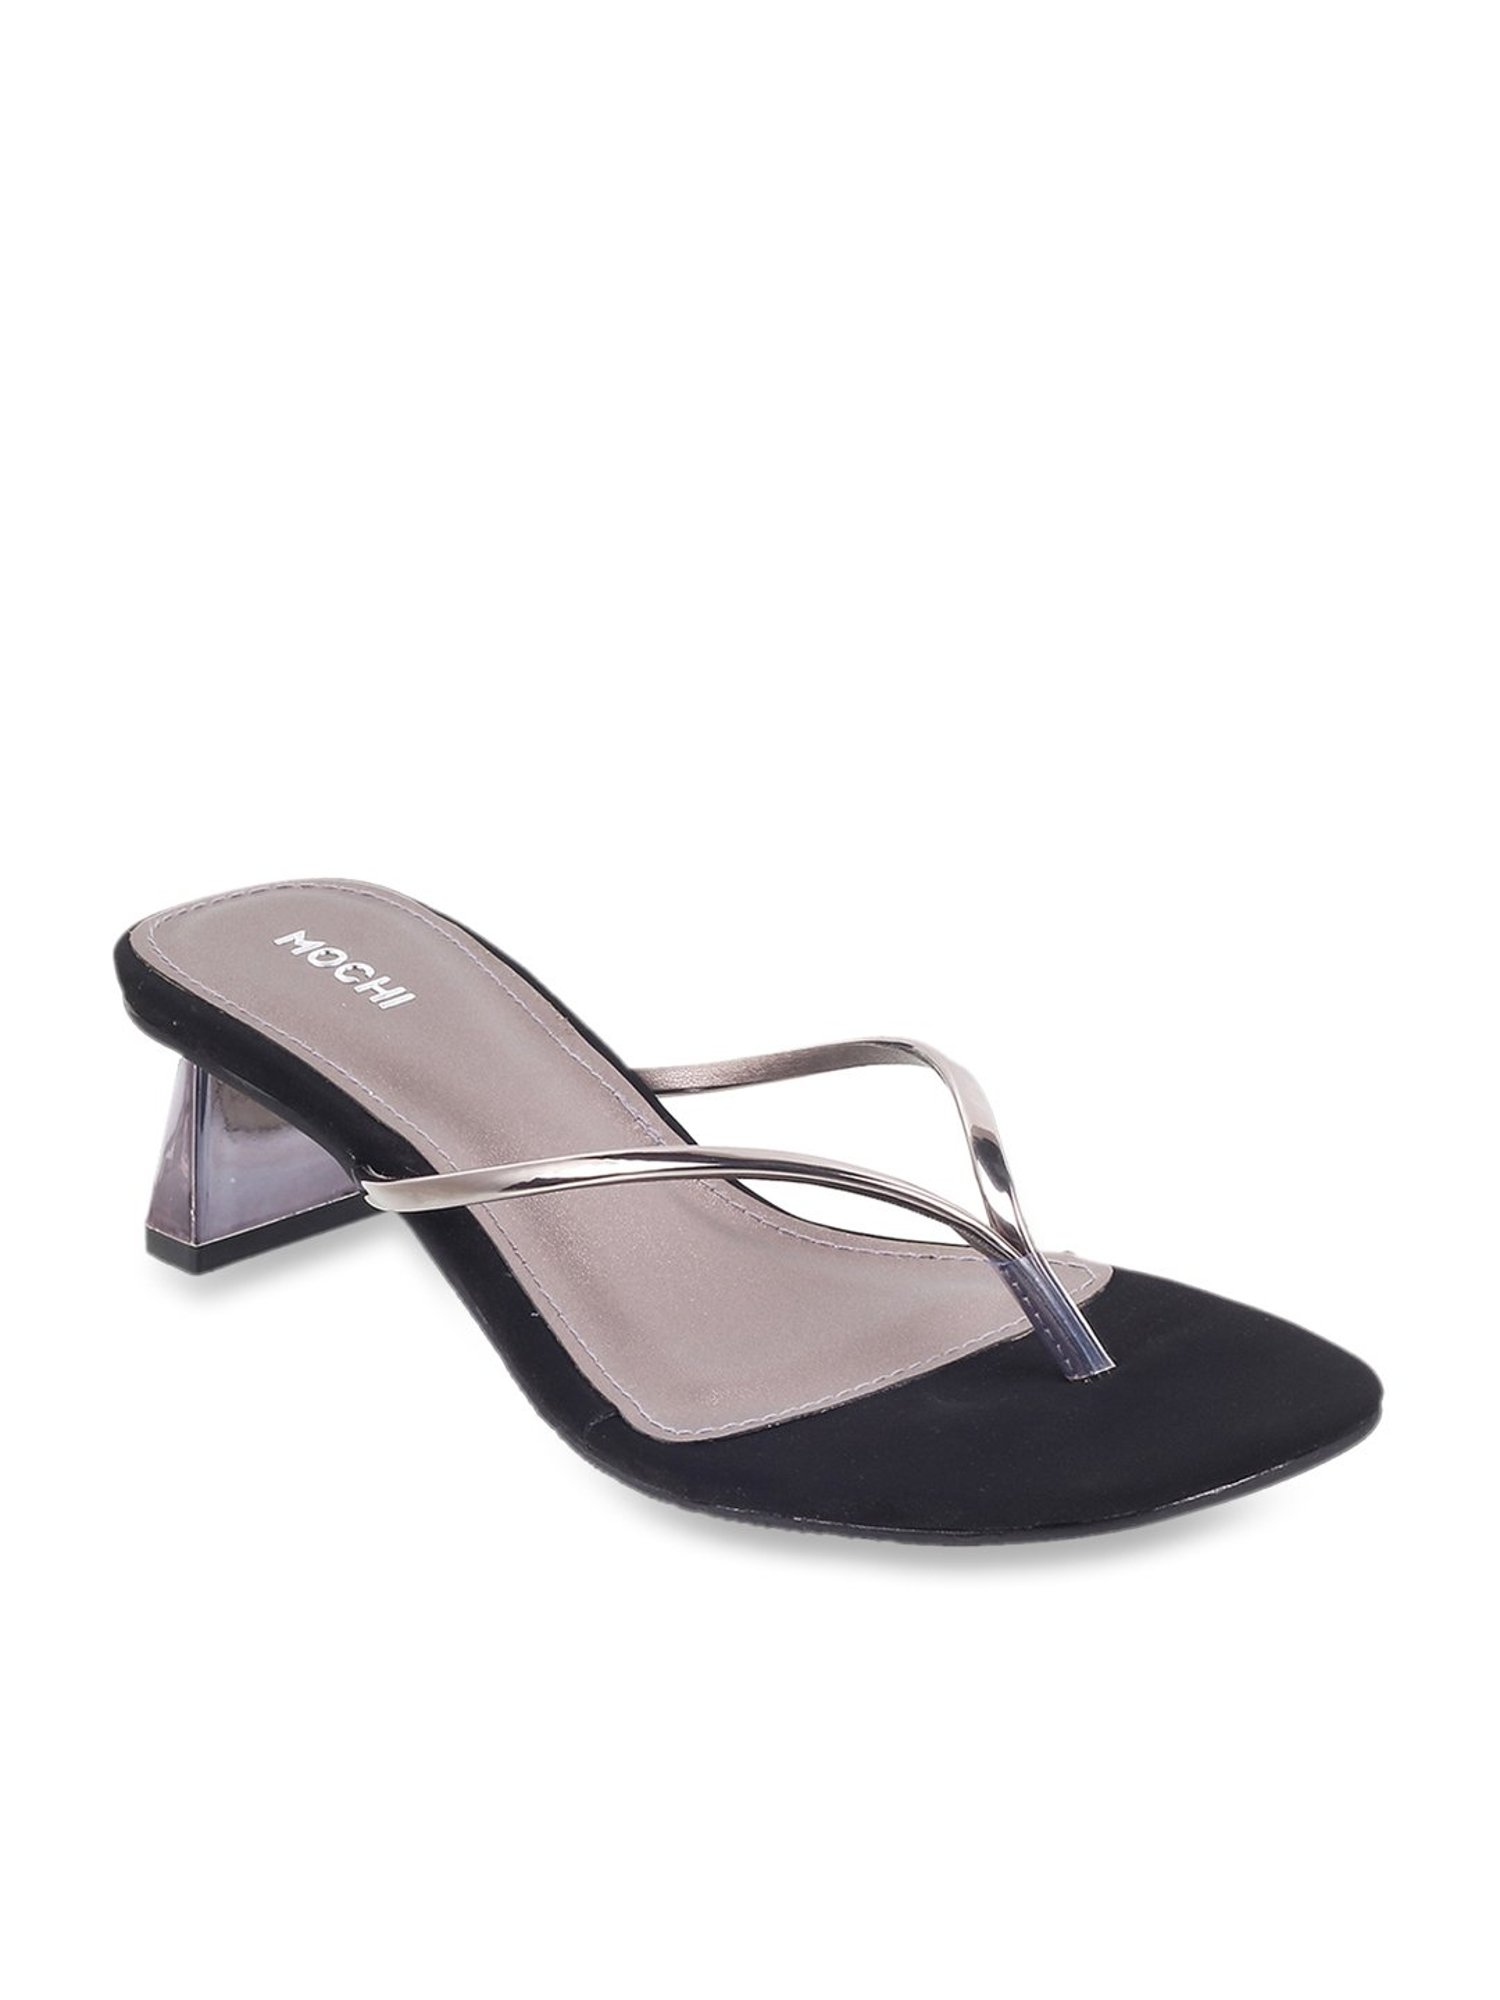 Buy Green Heeled Sandals for Women by Mochi Online | Ajio.com